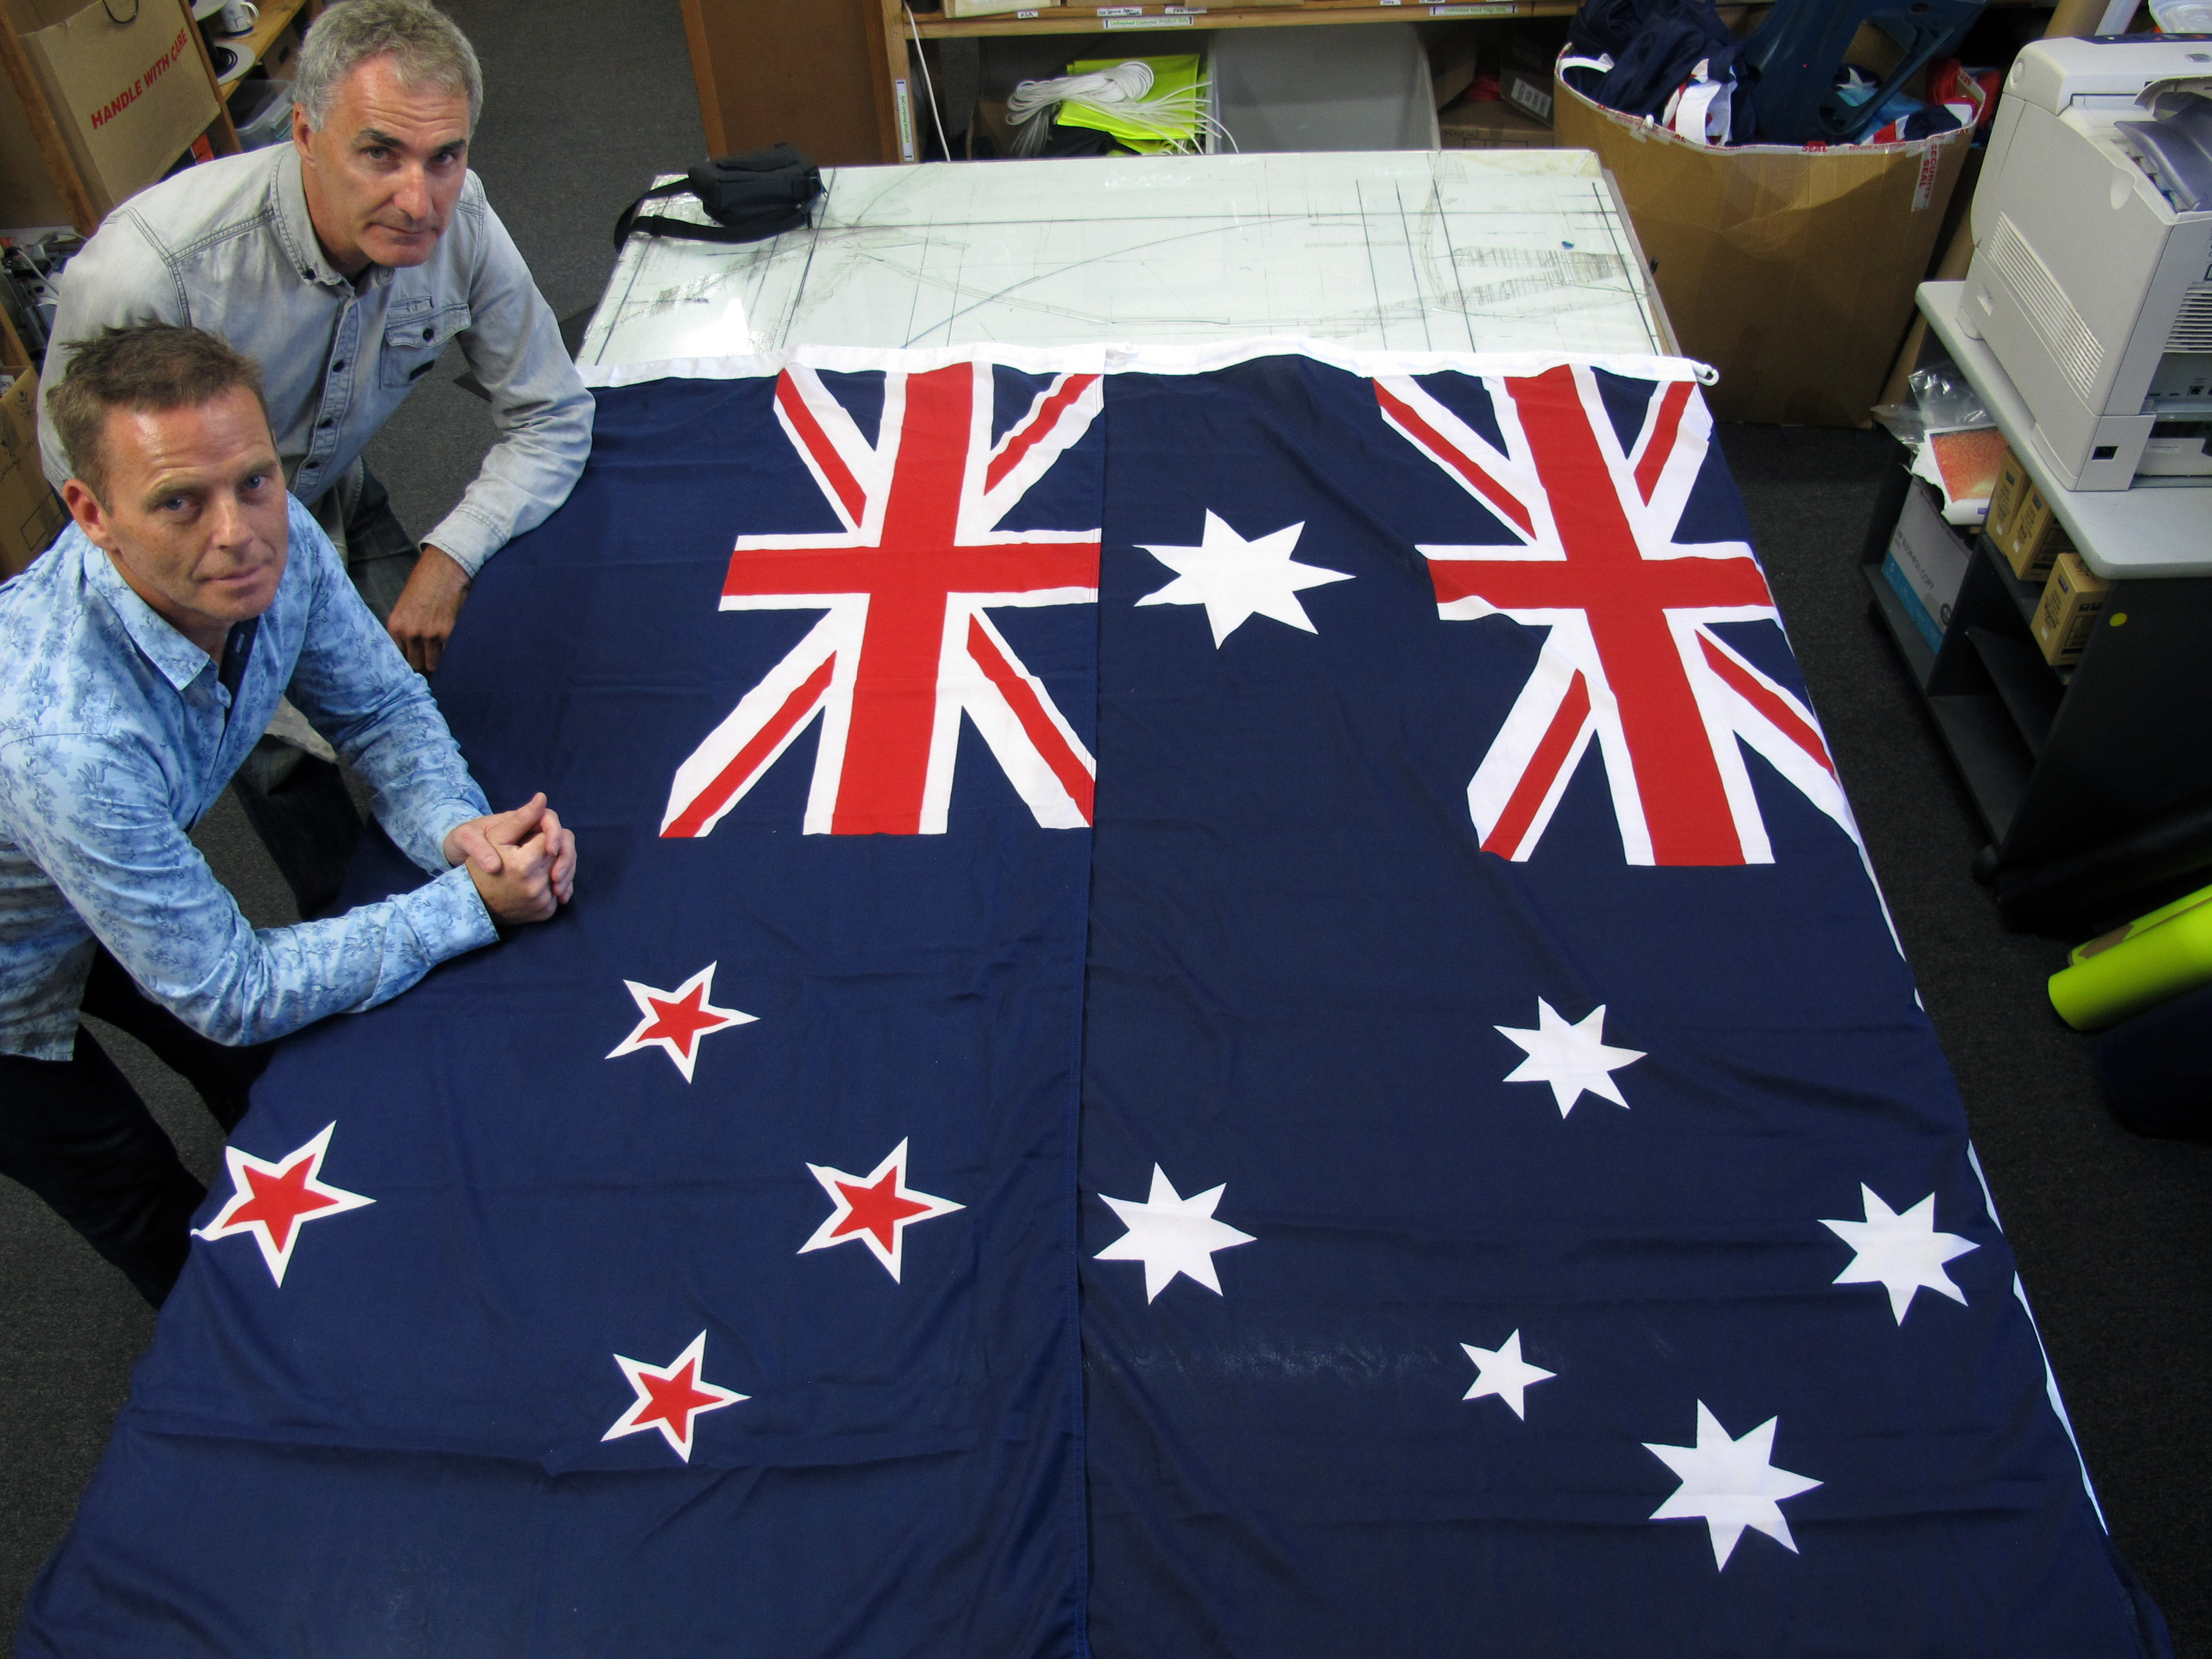 Звезды на флаге австралии. Флаг новой Зеландии. Флаг Австралии и новой Зеландии. Новозеландия флаг. Флаг Австралии и флаг новой Зеландии.